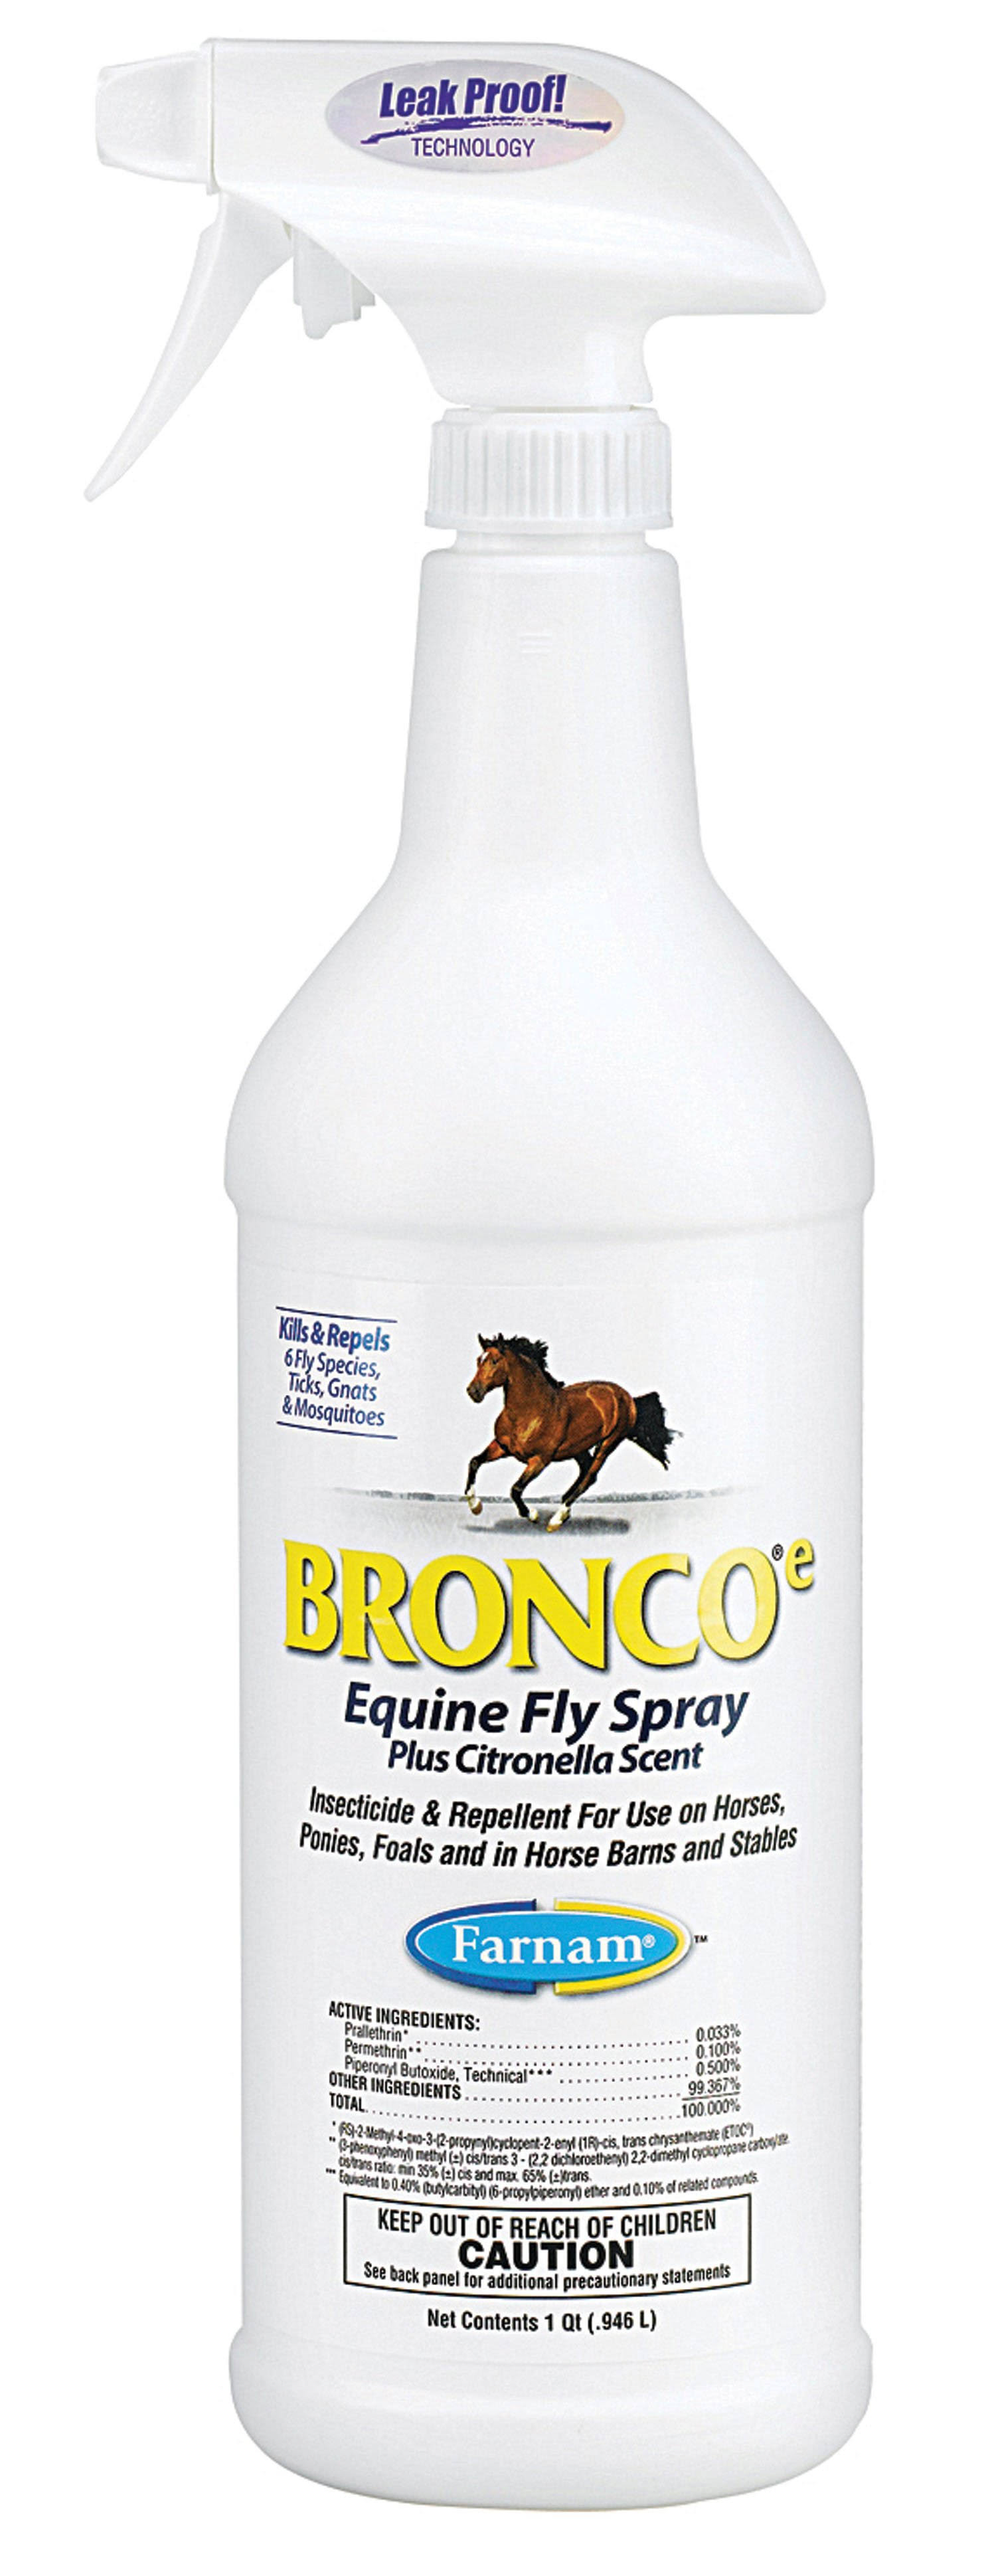 Farnam Broncoᵉ Plus Citronella Scent Equine Fly Spray